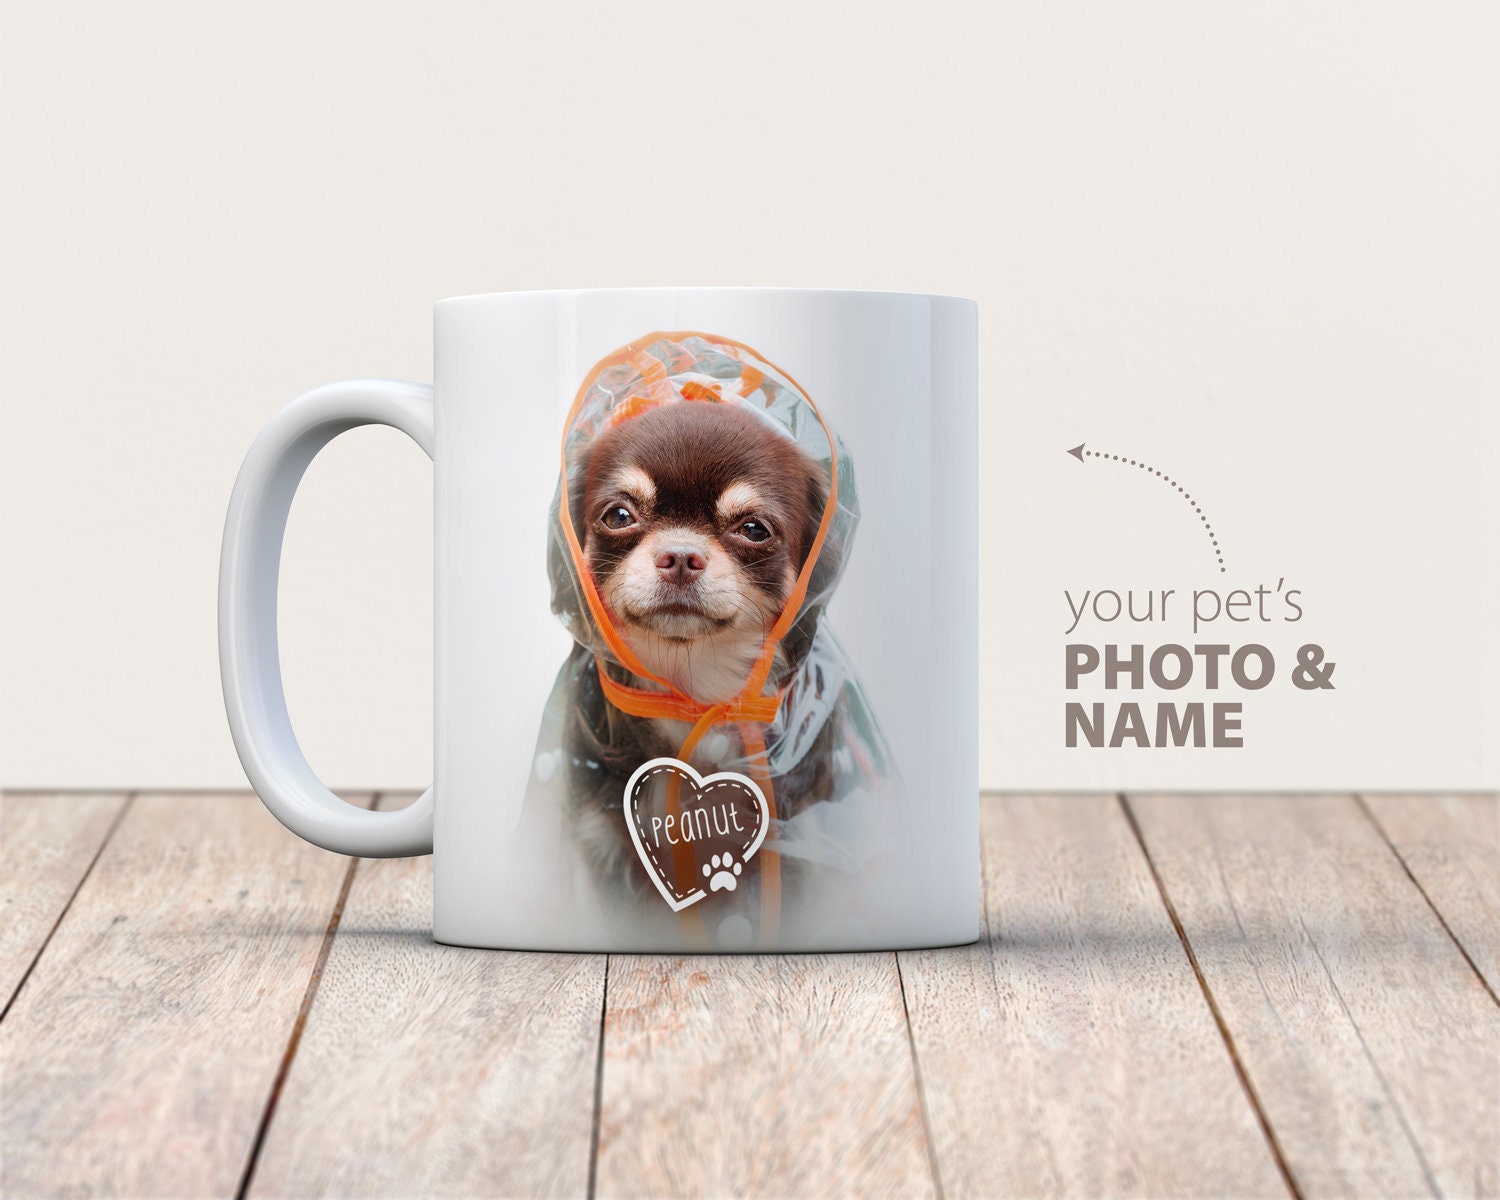 Black Pug - Personalized Pug Themed Gifts For Women Coffee Mug